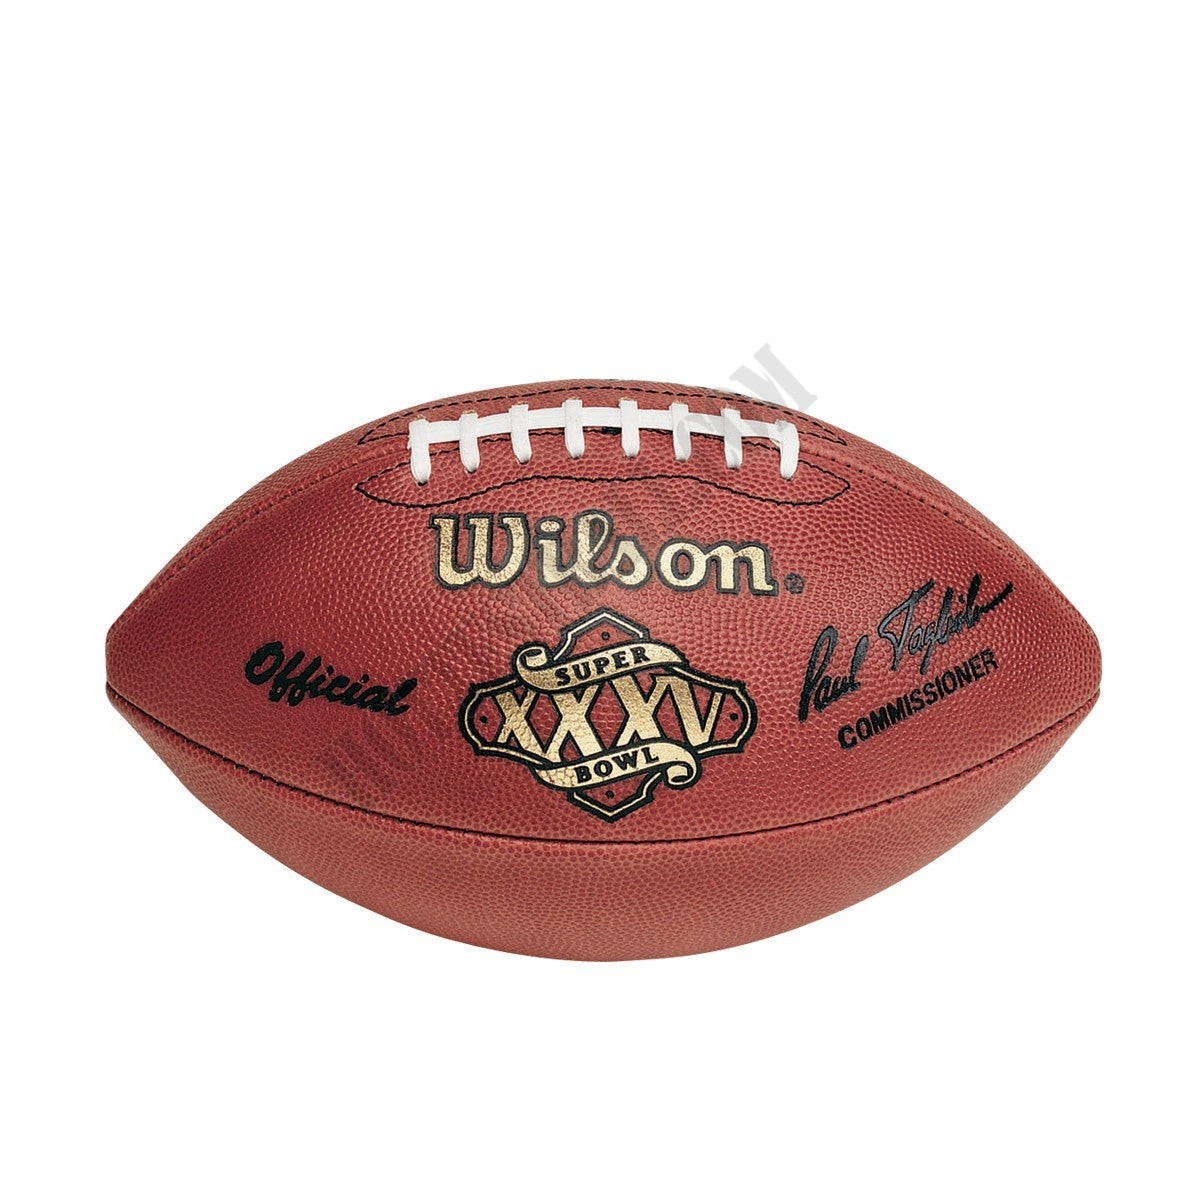 Super Bowl XXXV Game Football - Baltimore Ravens ● Wilson Promotions - -0